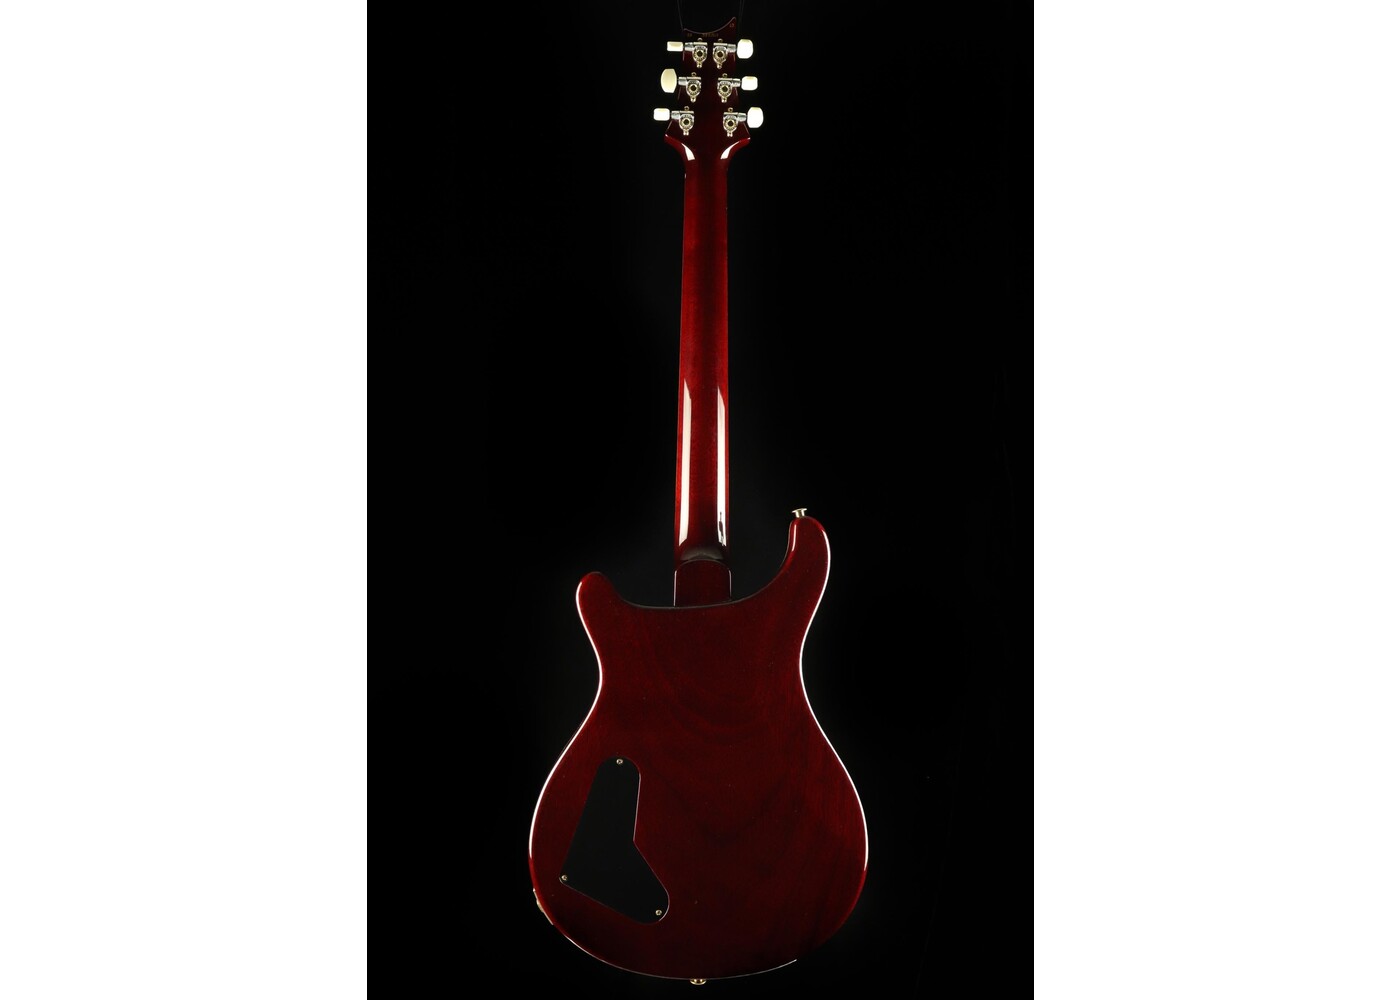 PRS Guitars PRS Paul’s Guitar Electric Guitar - Fire Red